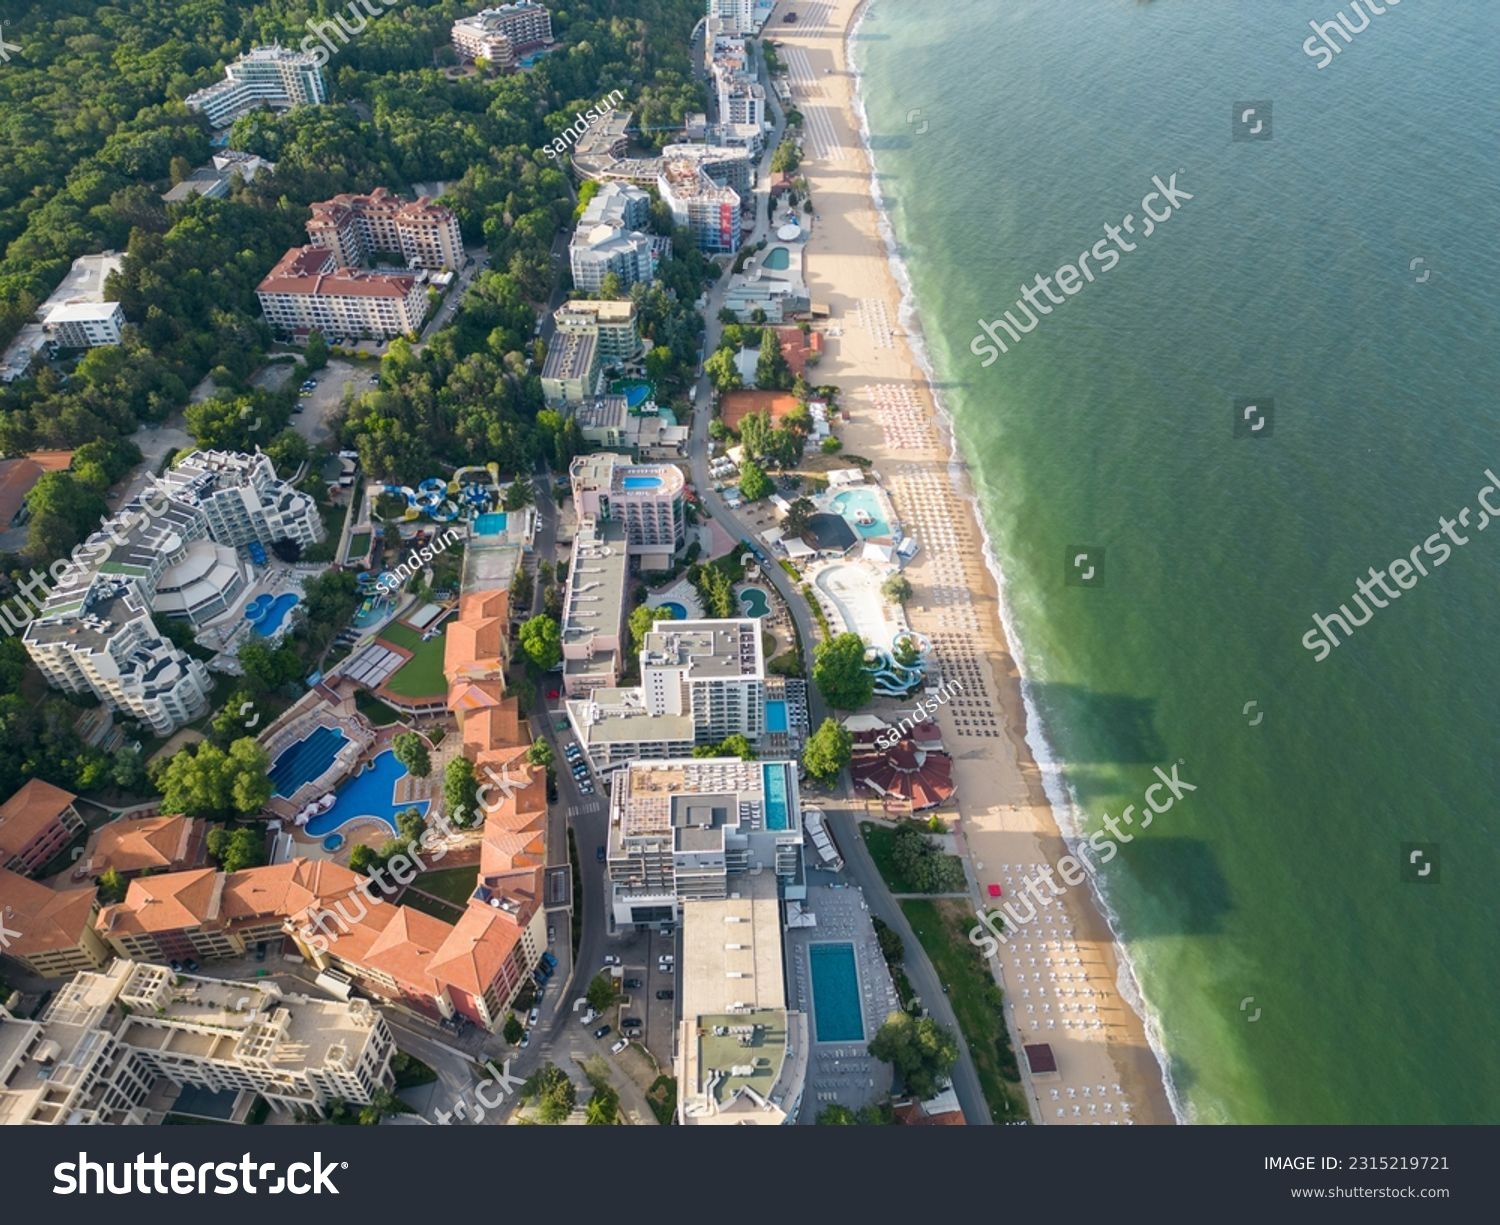 Aerial view of the beach and hotels in Golden Sands, Zlatni Piasaci. Varna, Bulgaria #2315219721